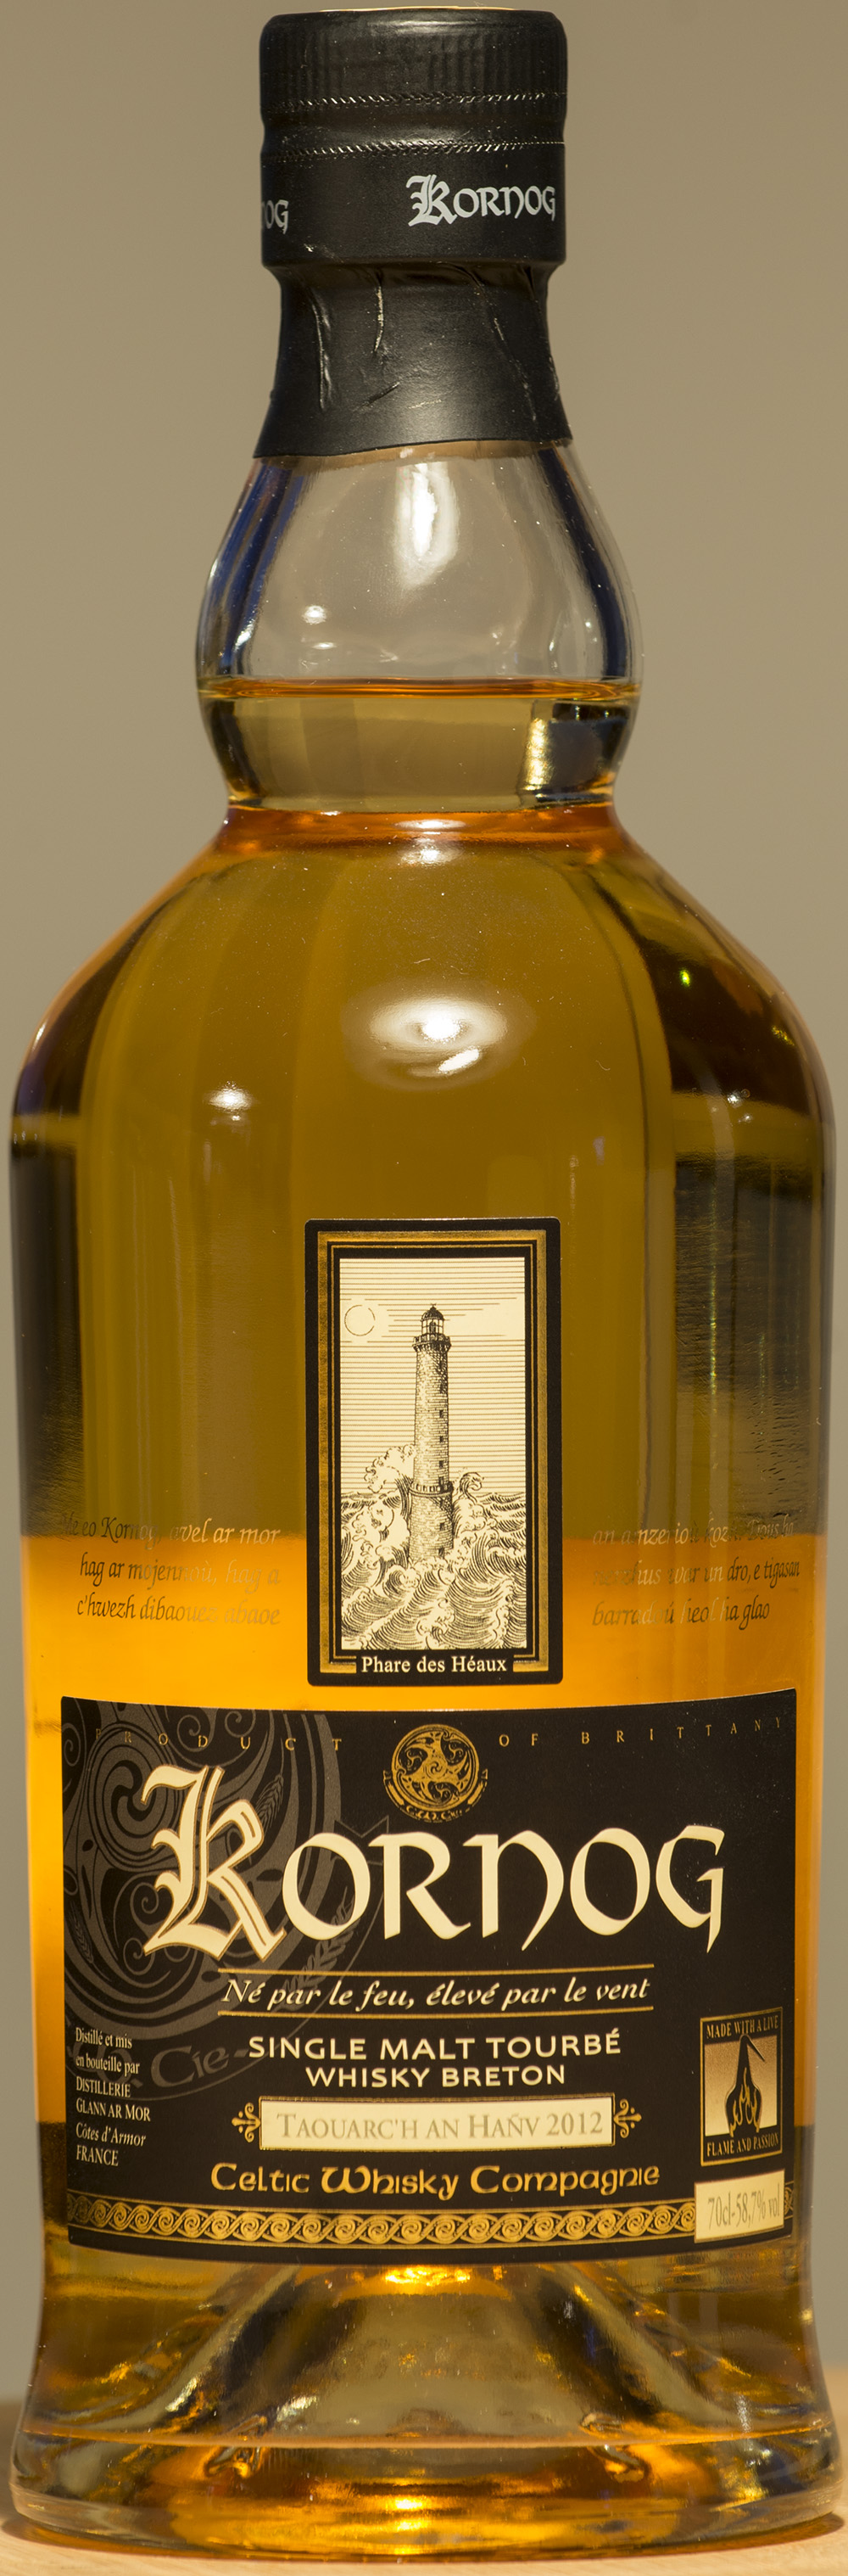 Billede: DSC_9105 - Kornog - Taouarch an Hanv 2012 - bottle front.jpg